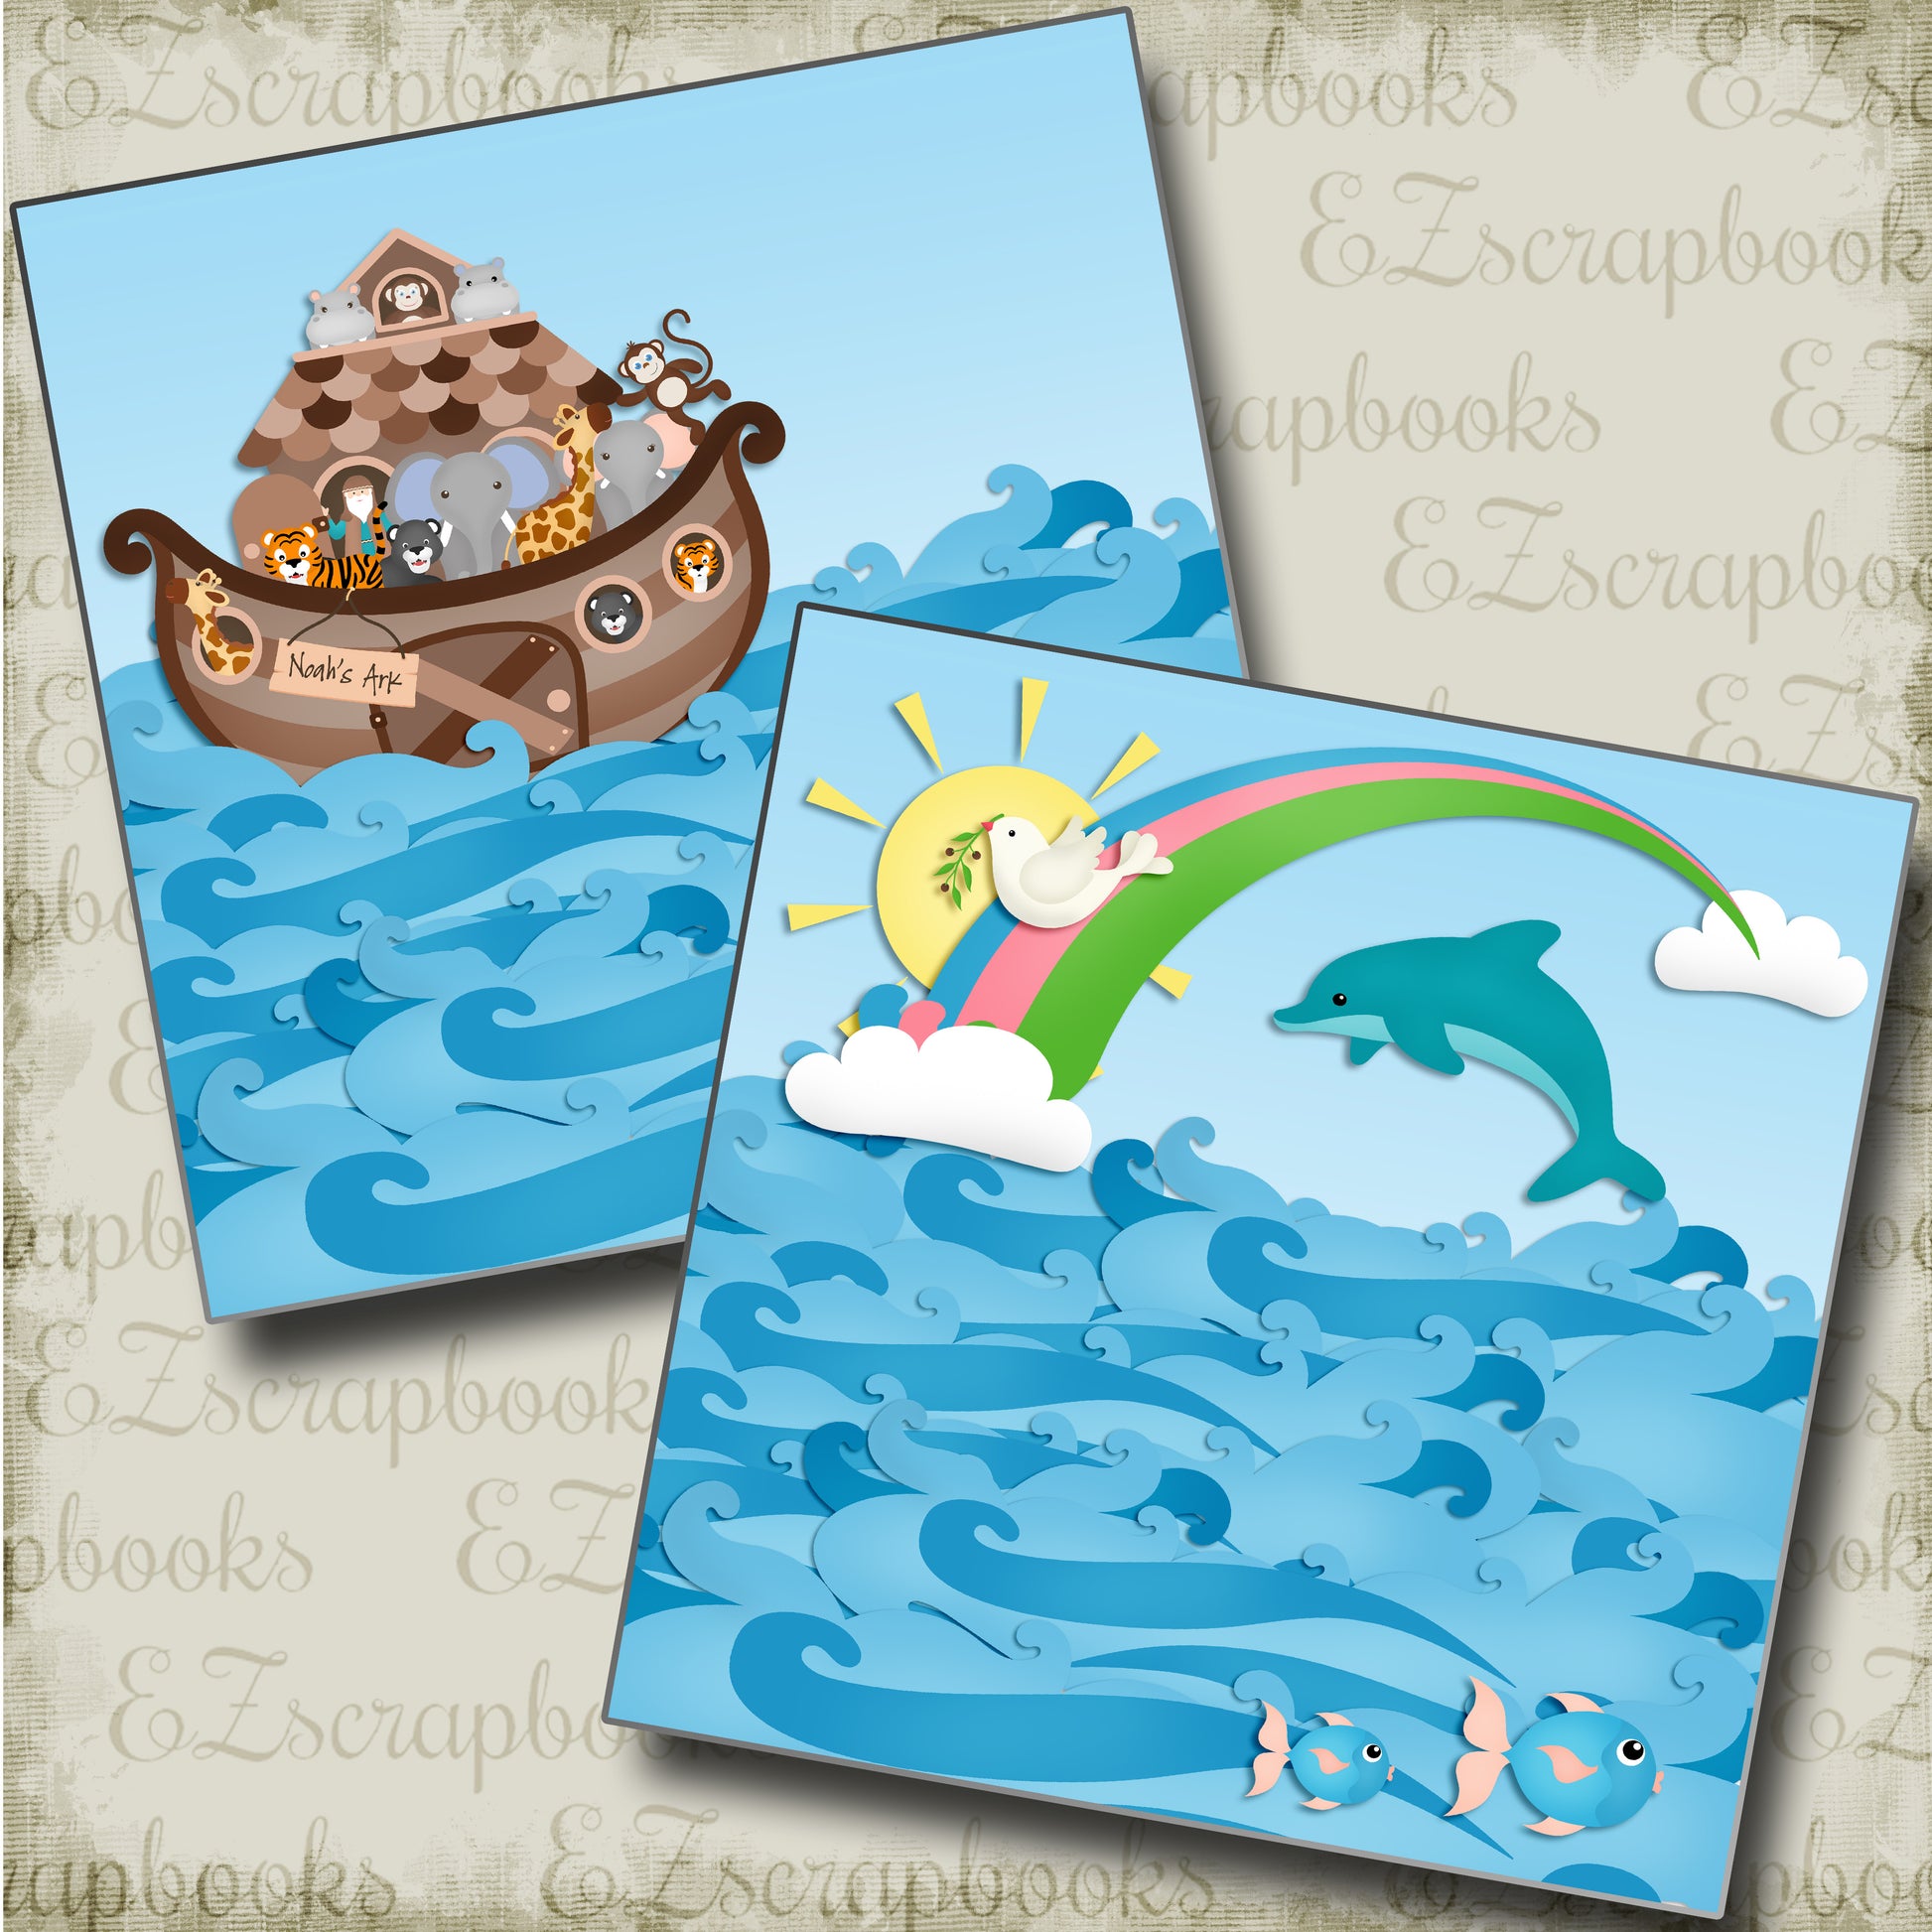 Noah's Ark NPM - 4883 - EZscrapbooks Scrapbook Layouts Beach - Tropical, Faith - Religious, Swimming - Pool